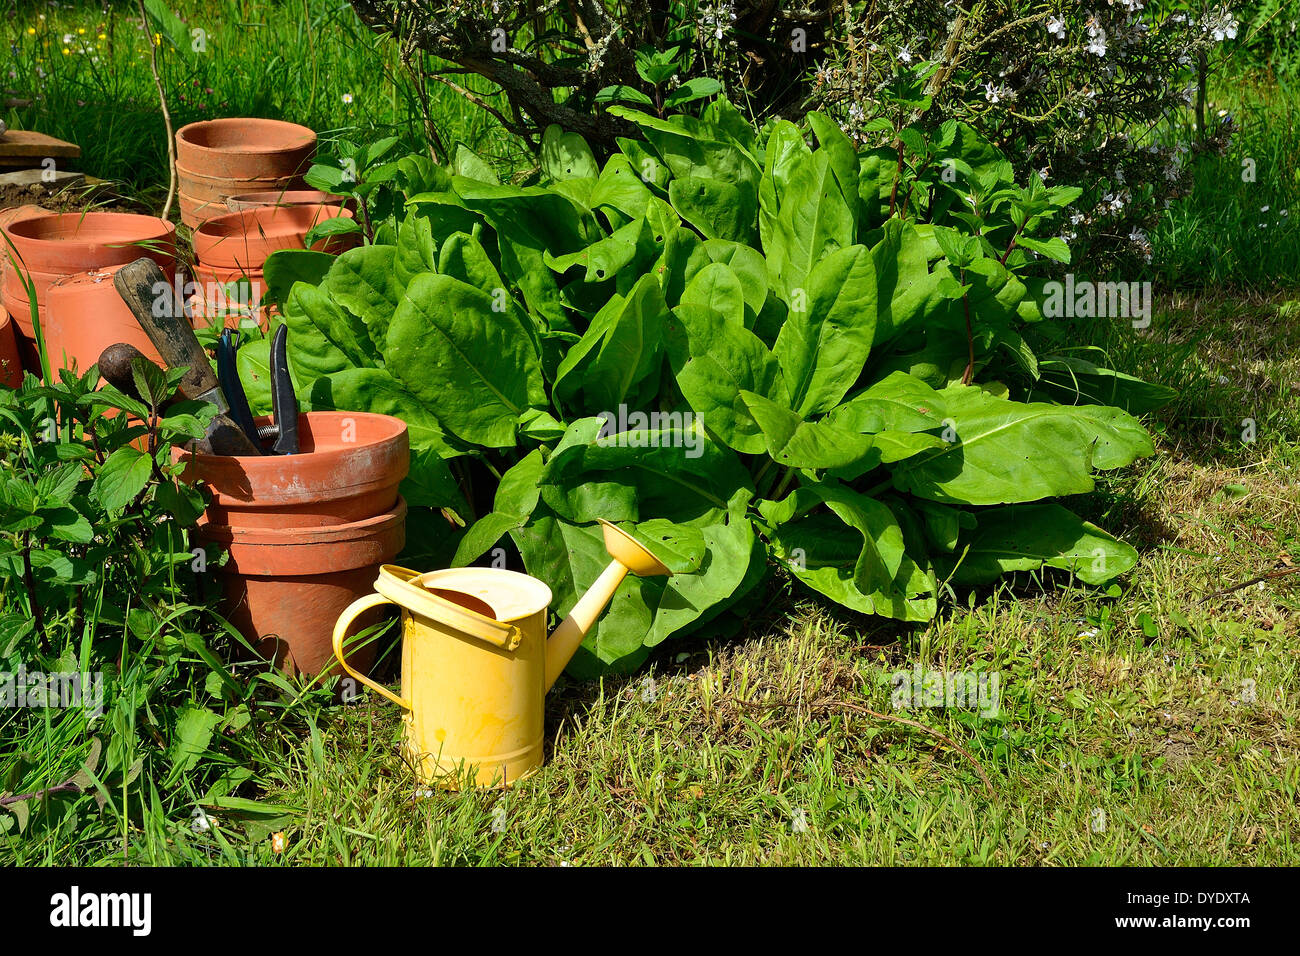 Rumex acetosa in a vegetable garden Stock Photo